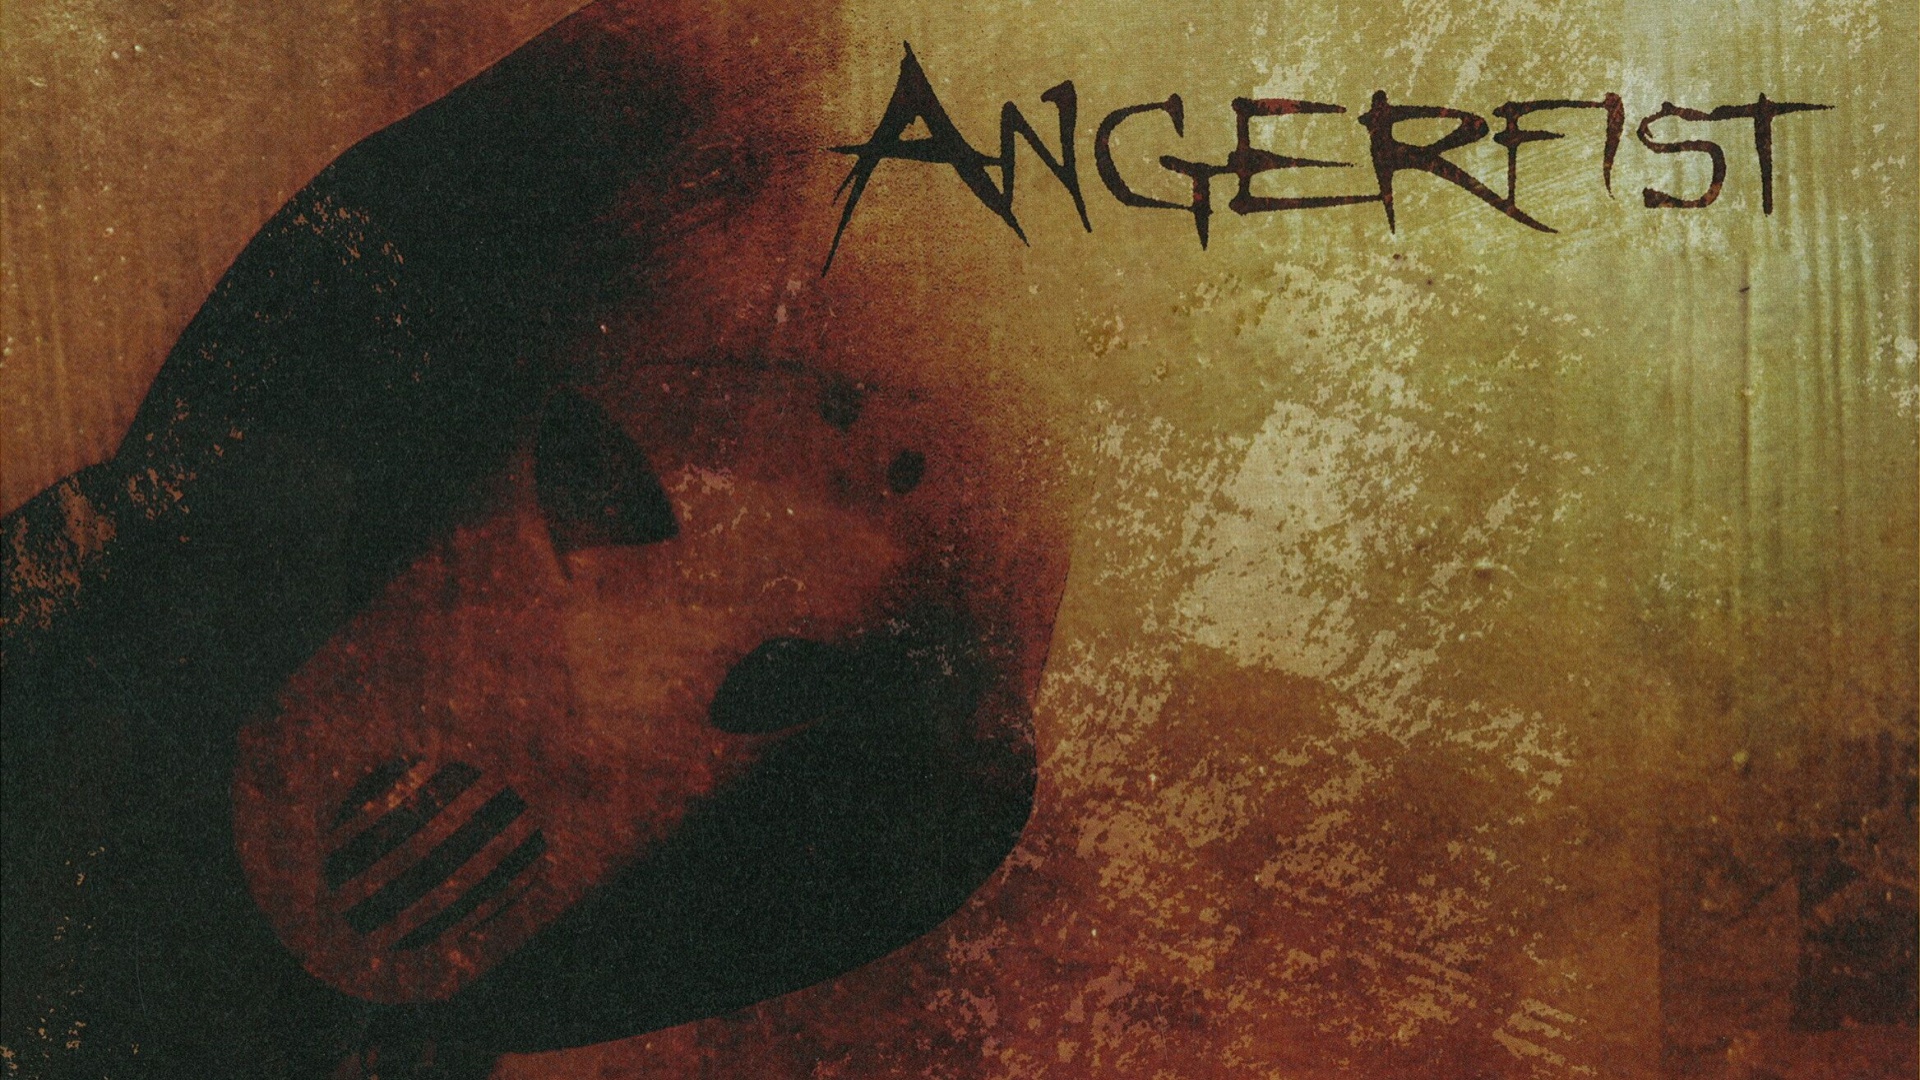 angerfist wallpaper,head,font,album cover,mouth,art